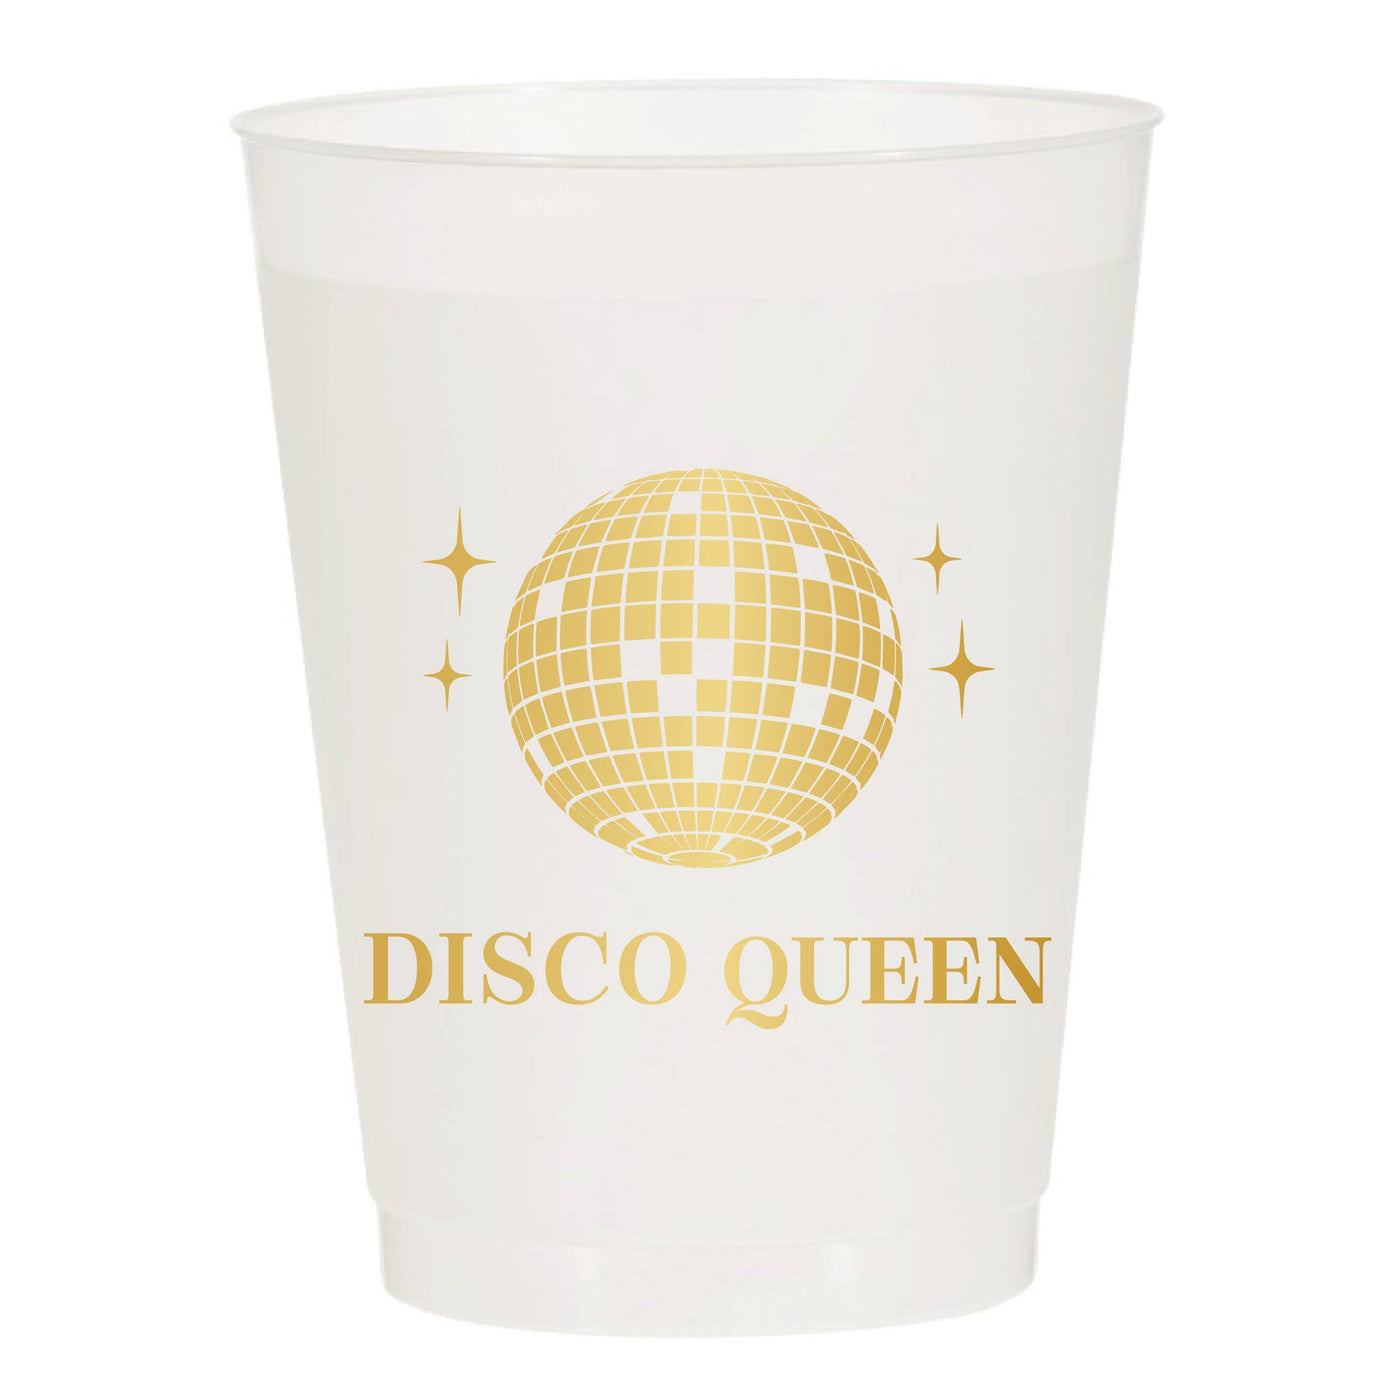 Disco Queen Reusable Cups - Set of 10